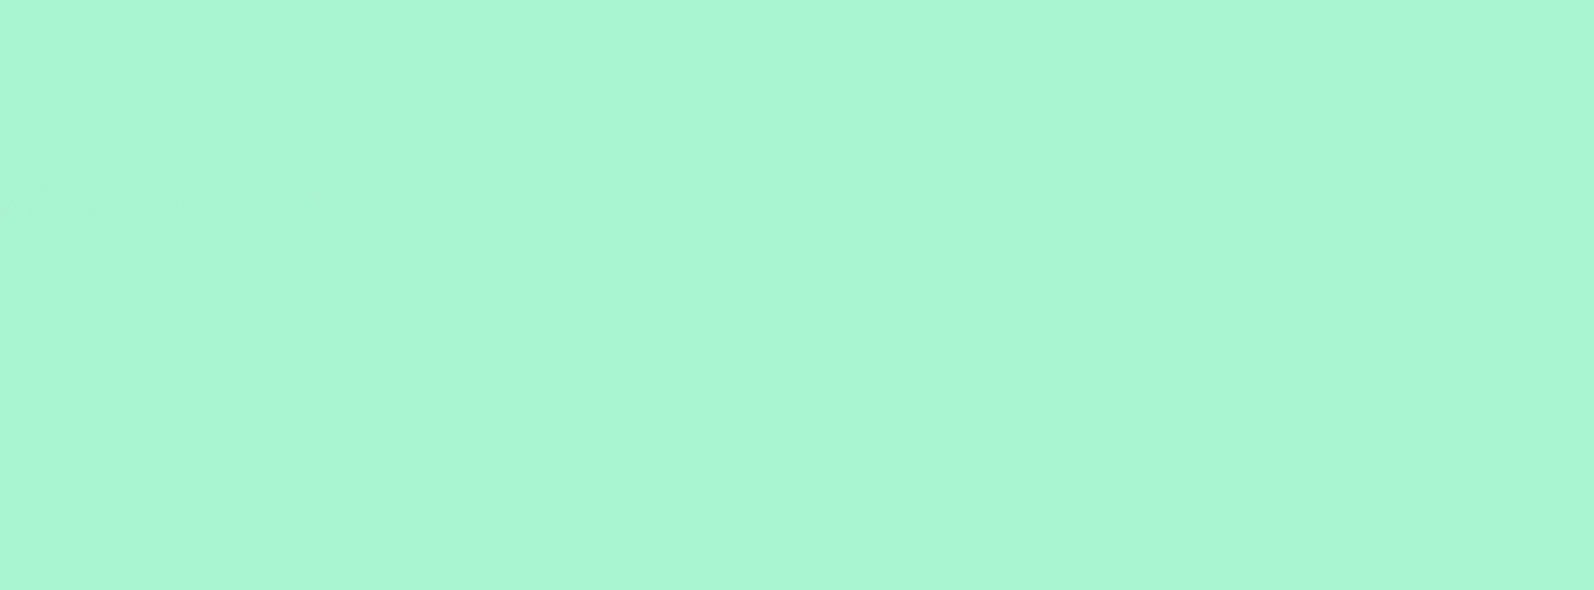 6300 - Resif Yeşil